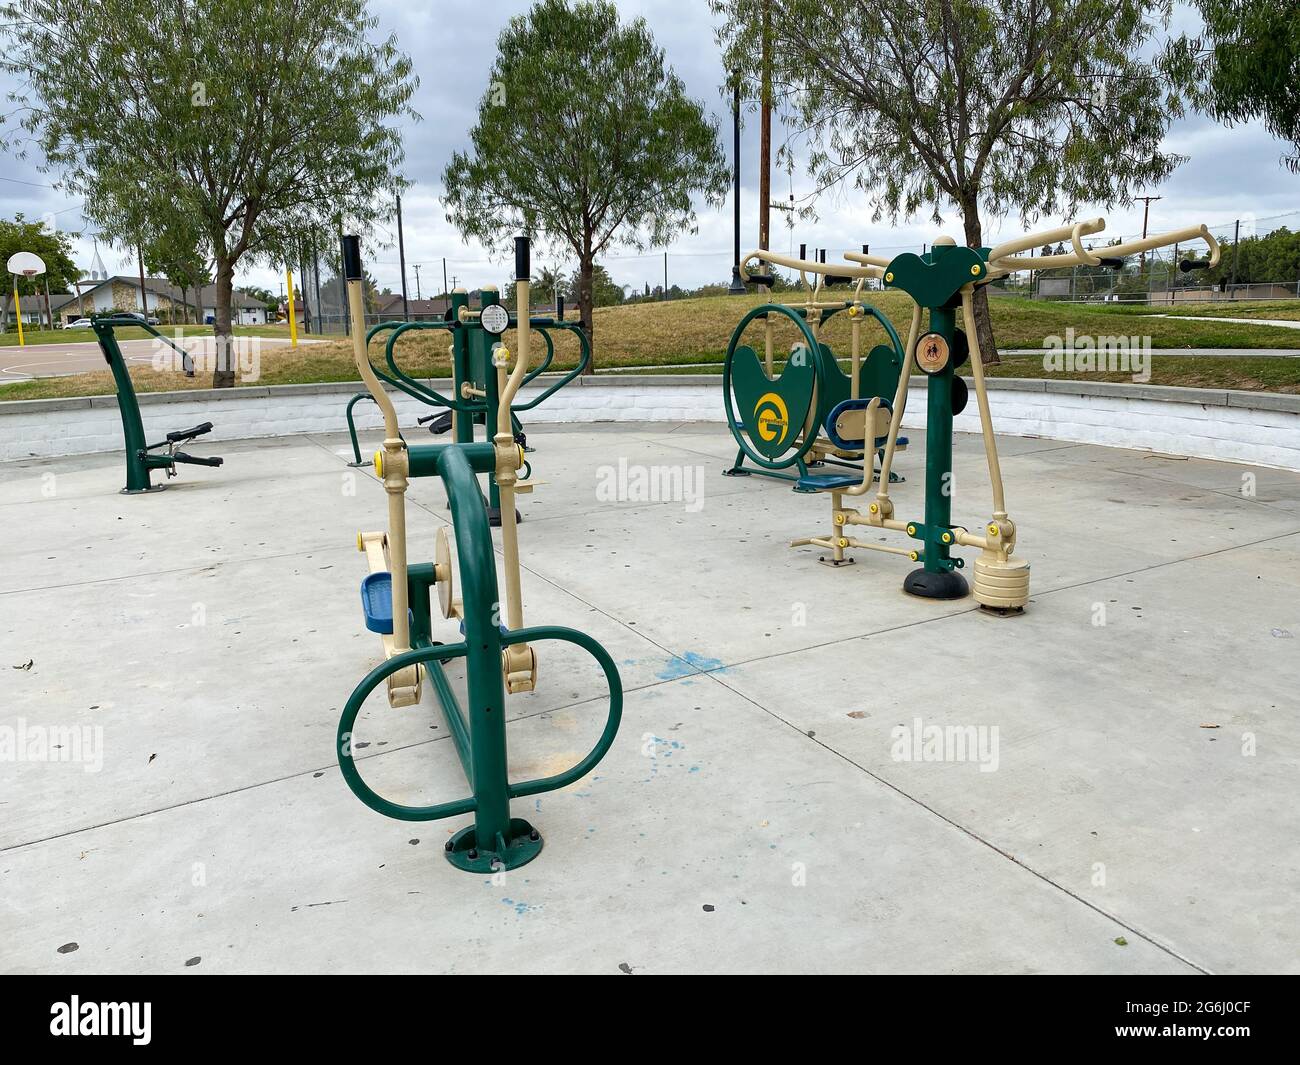 https://c8.alamy.com/comp/2G6J0CF/outdoor-fitness-equipment-in-a-public-park-free-exercise-equipment-june-16th-2021-placentia-california-usa-2G6J0CF.jpg